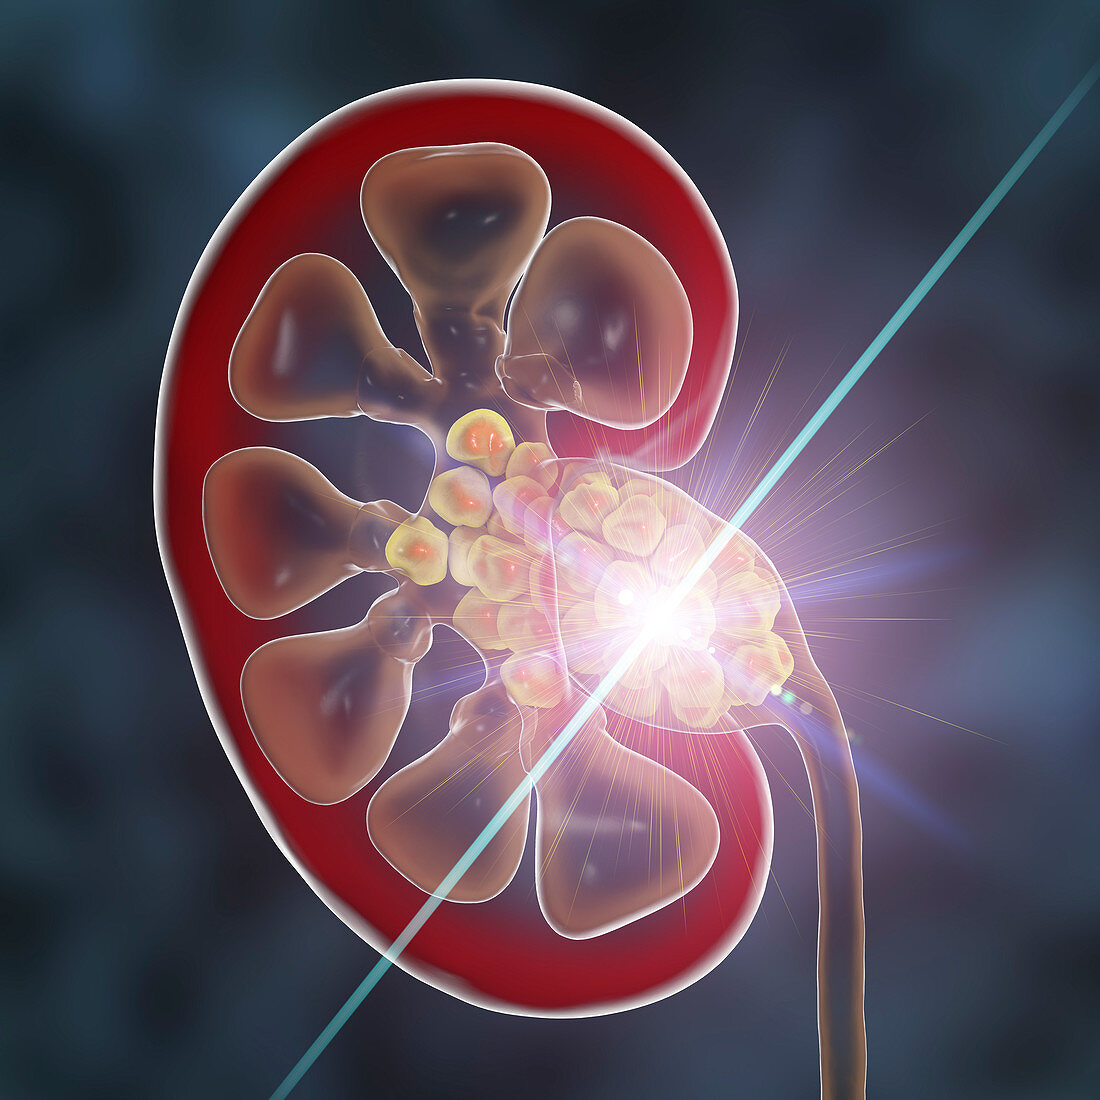 Kidney stone treatment, conceptual illustration